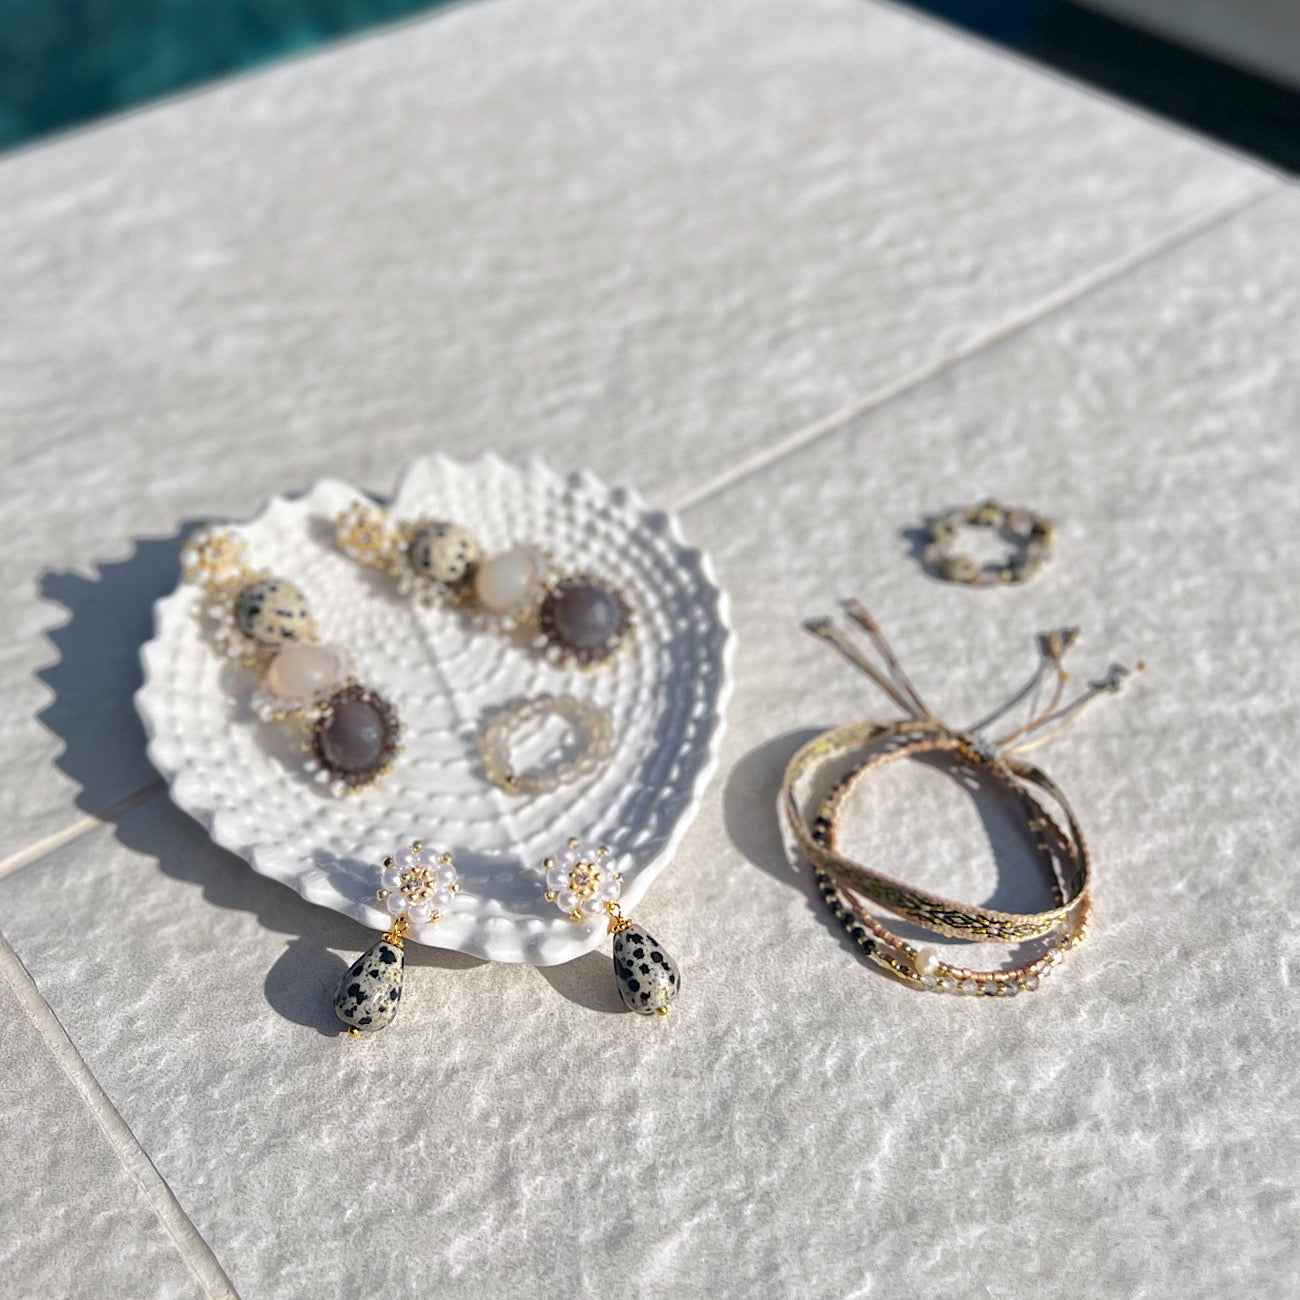 white and grey summer jewelry from natural dalmatis jasper gemstones 